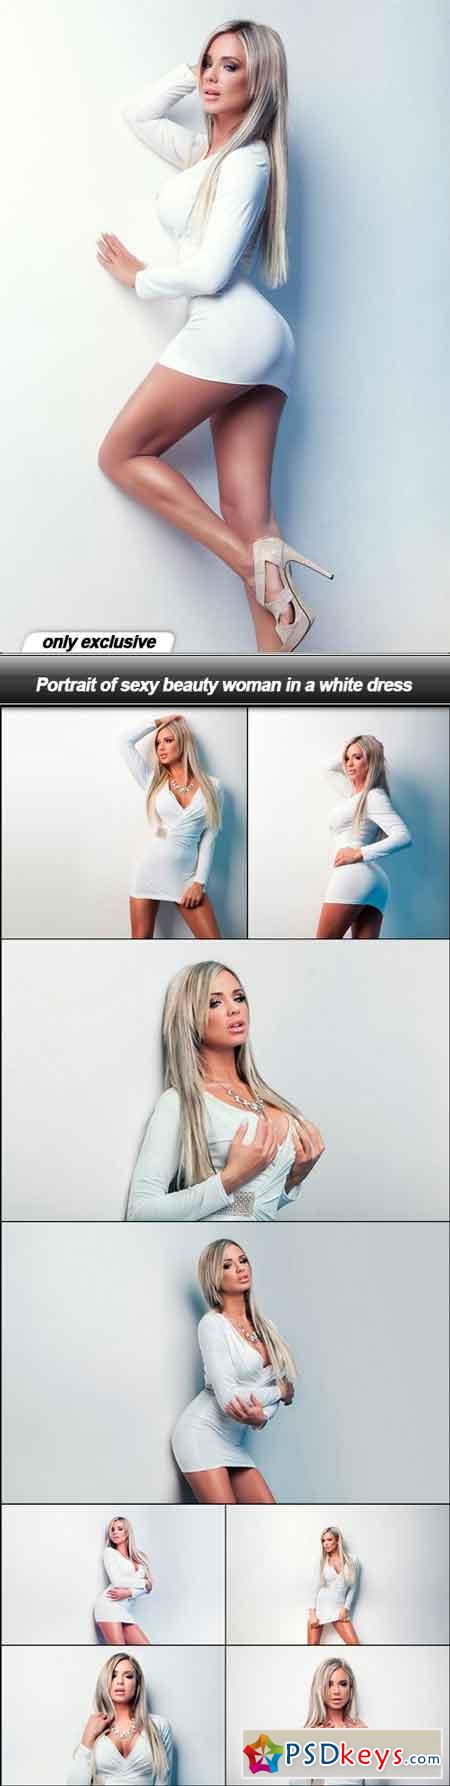 Portrait of sexy beauty woman in a white dress - 9 UHQ JPEG